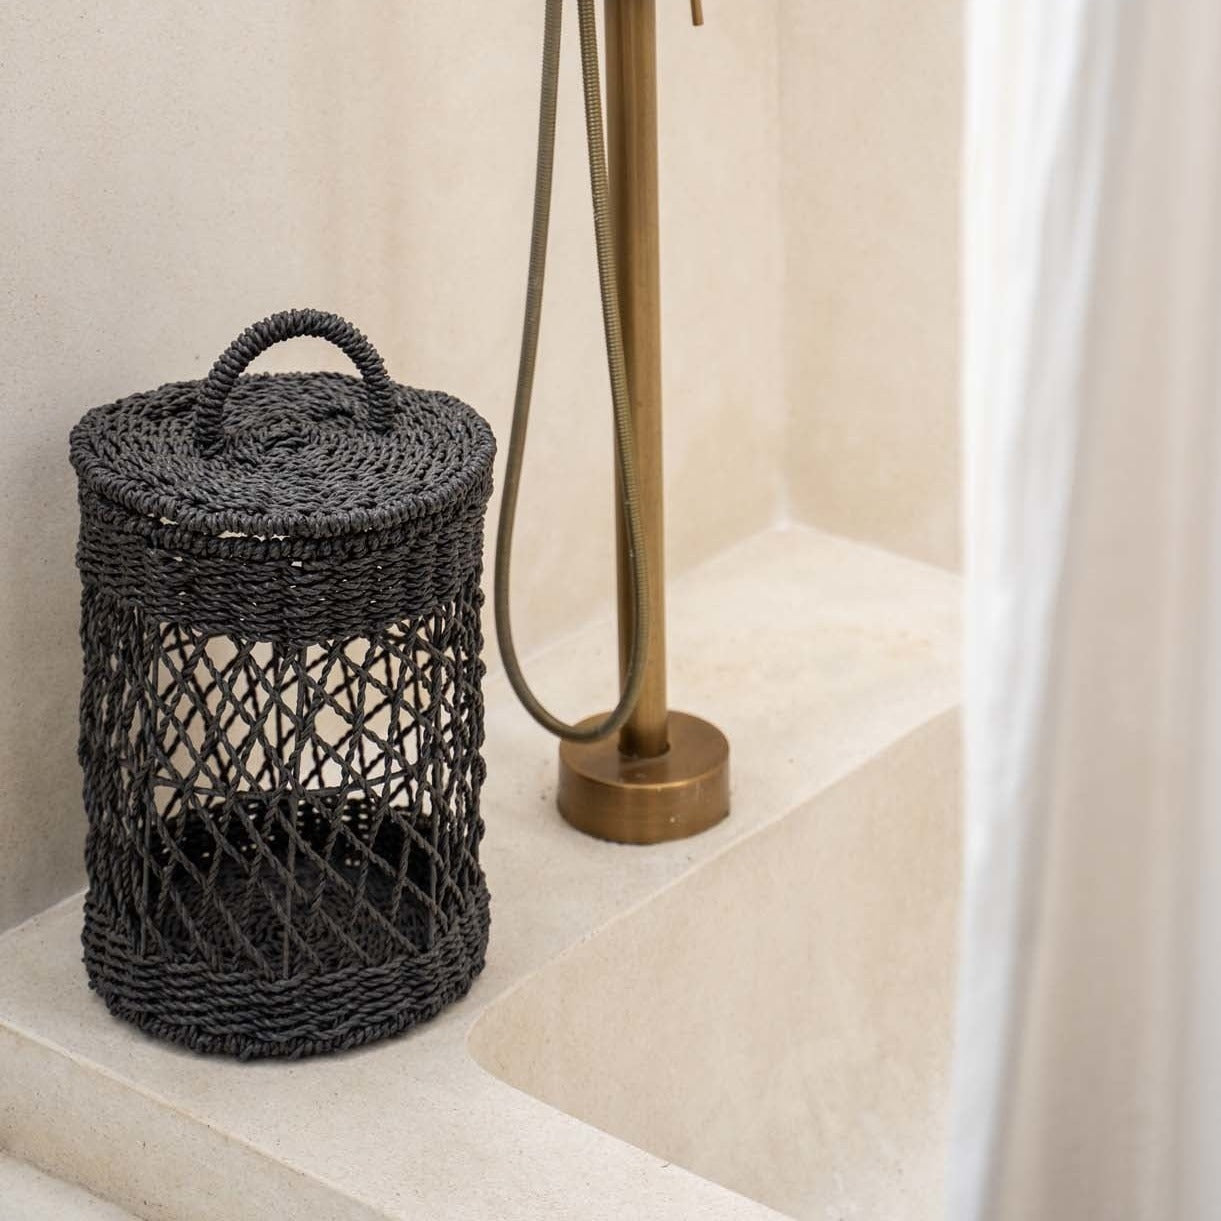 THE LAUNDRY Baskets Natural Fiber bath interior view